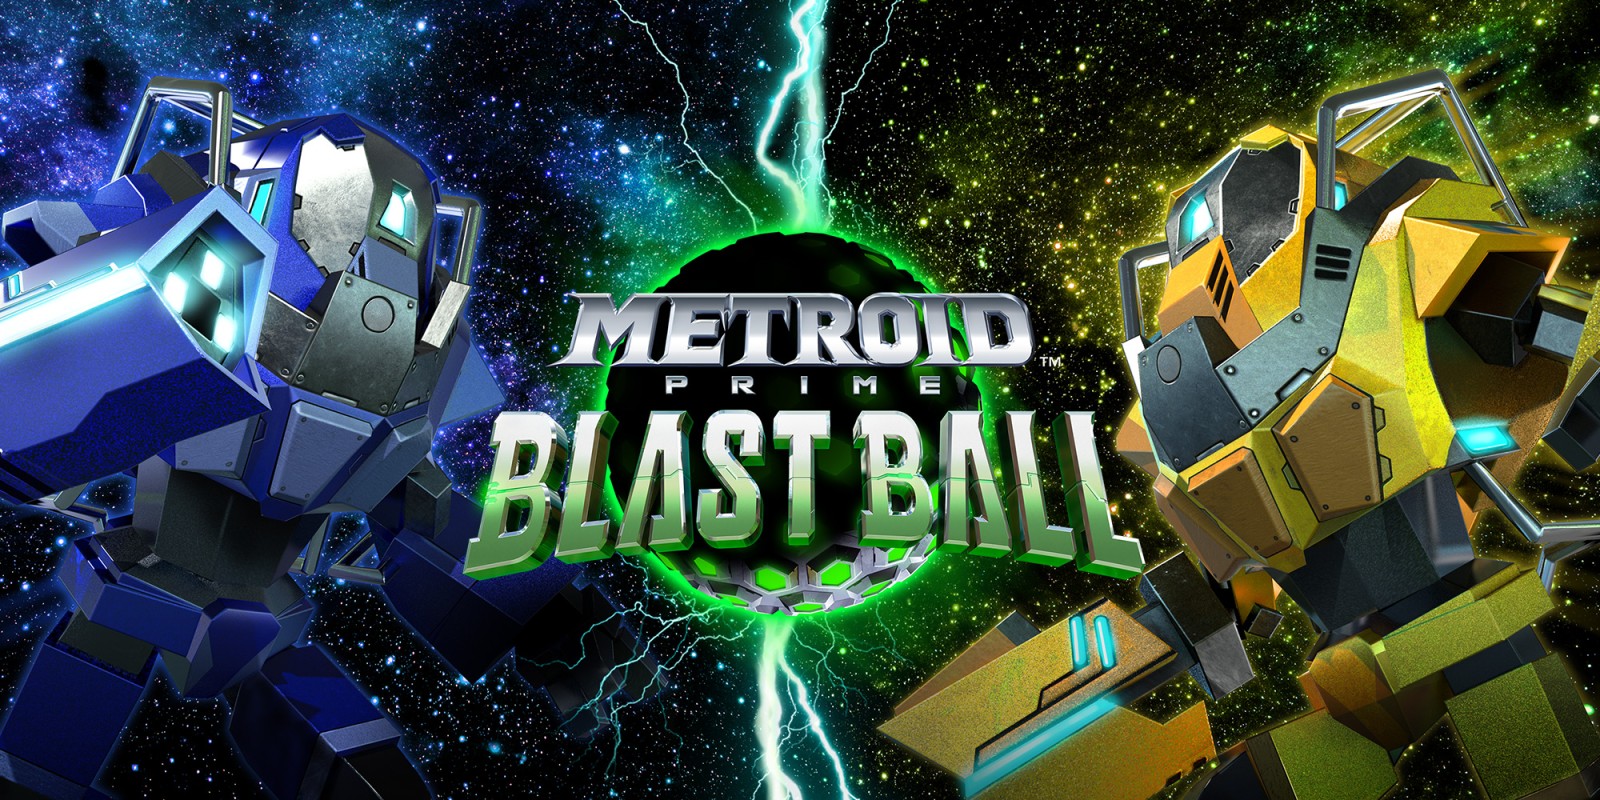 Metroid Prime: Blast Ball | Nintendo 3DS download software | Games | Nintendo1600 x 800